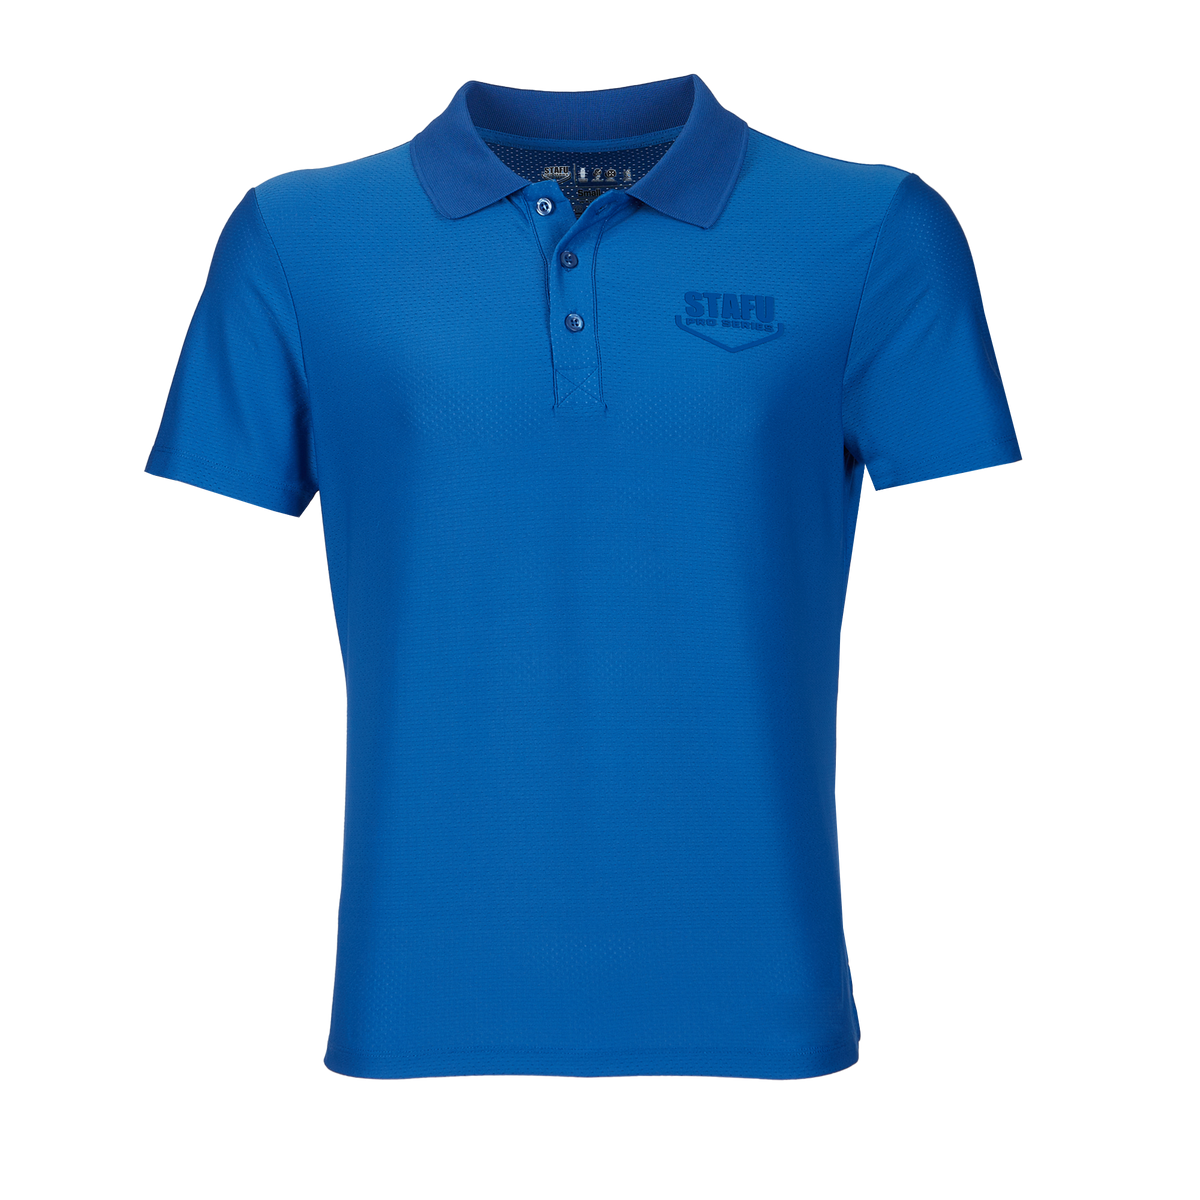 League Air Men's Short Sleeve Fisherman Sailor Blue UV Protected Polo Shirt